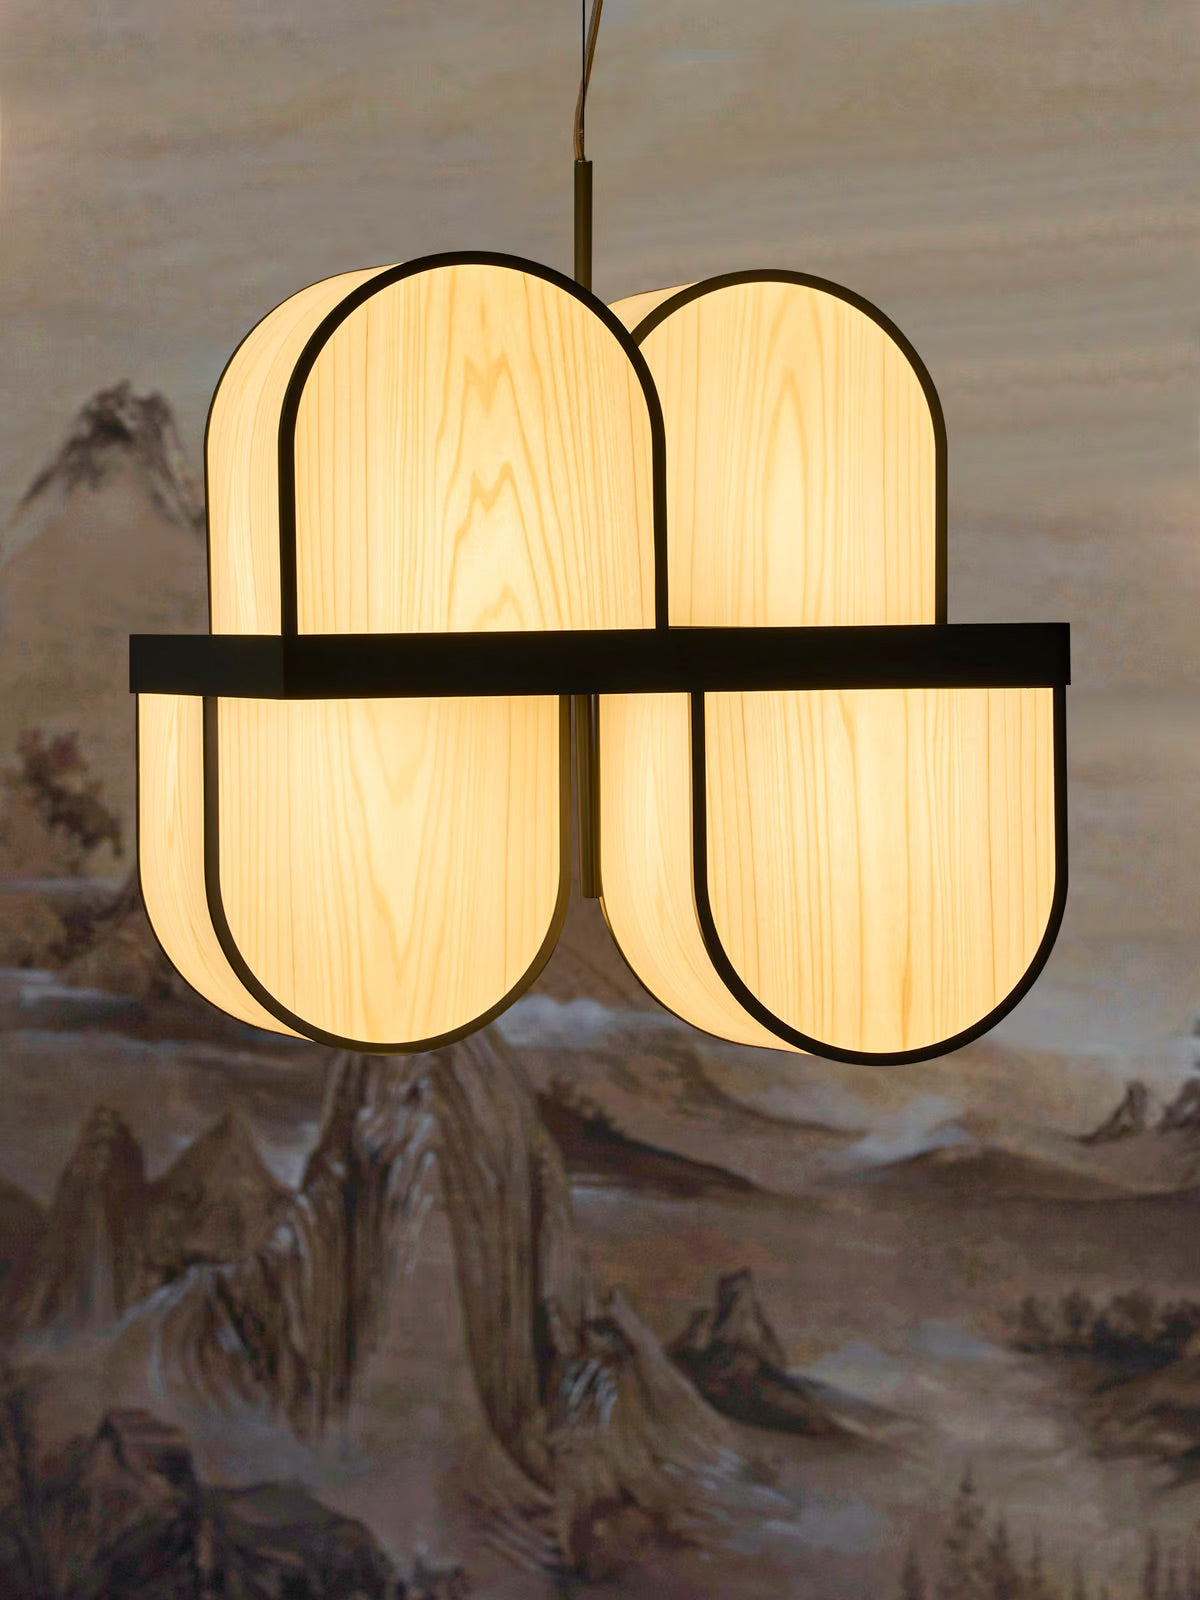 Wood Veneer white Suspended light. Bauhaus lighting. bauhaus design with midcentury Modern natural veneer